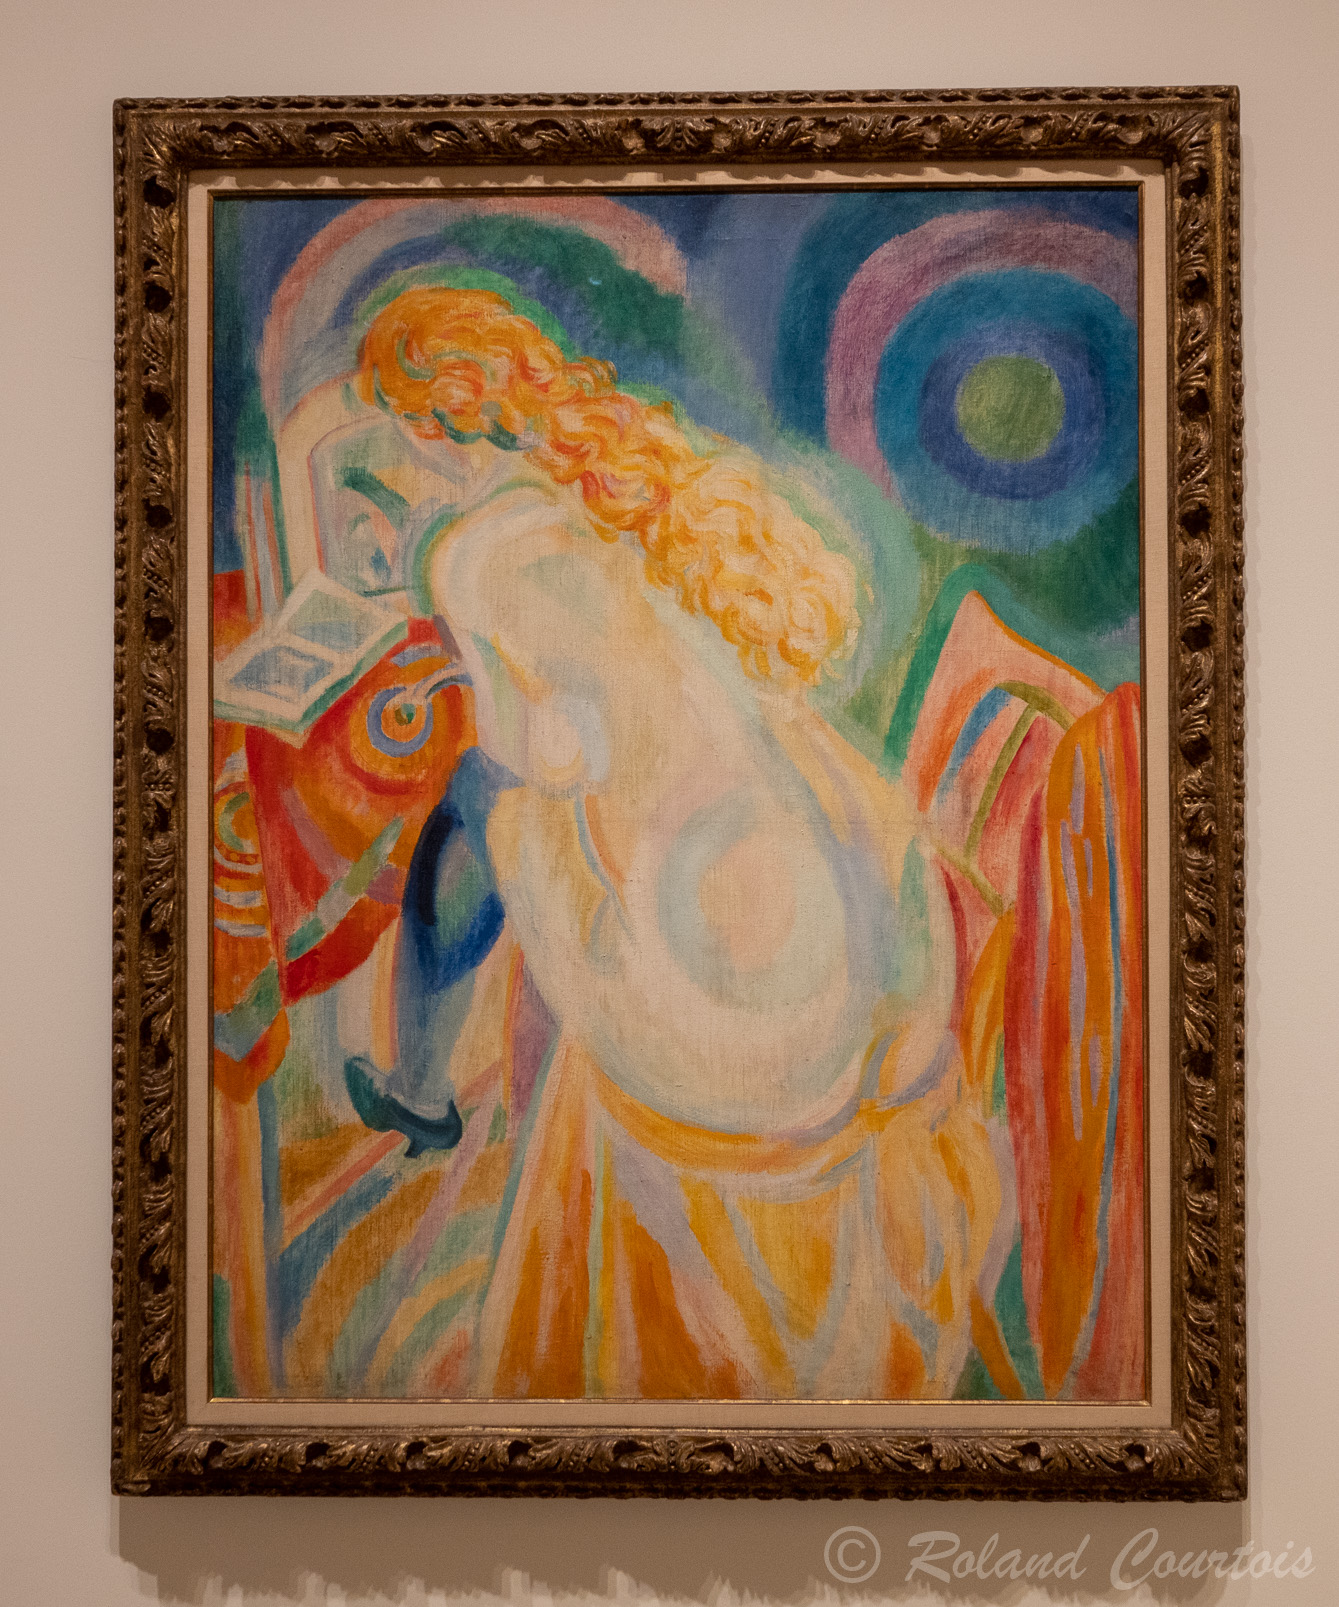 Robert Delaunay - Femme nue lisant (1915).